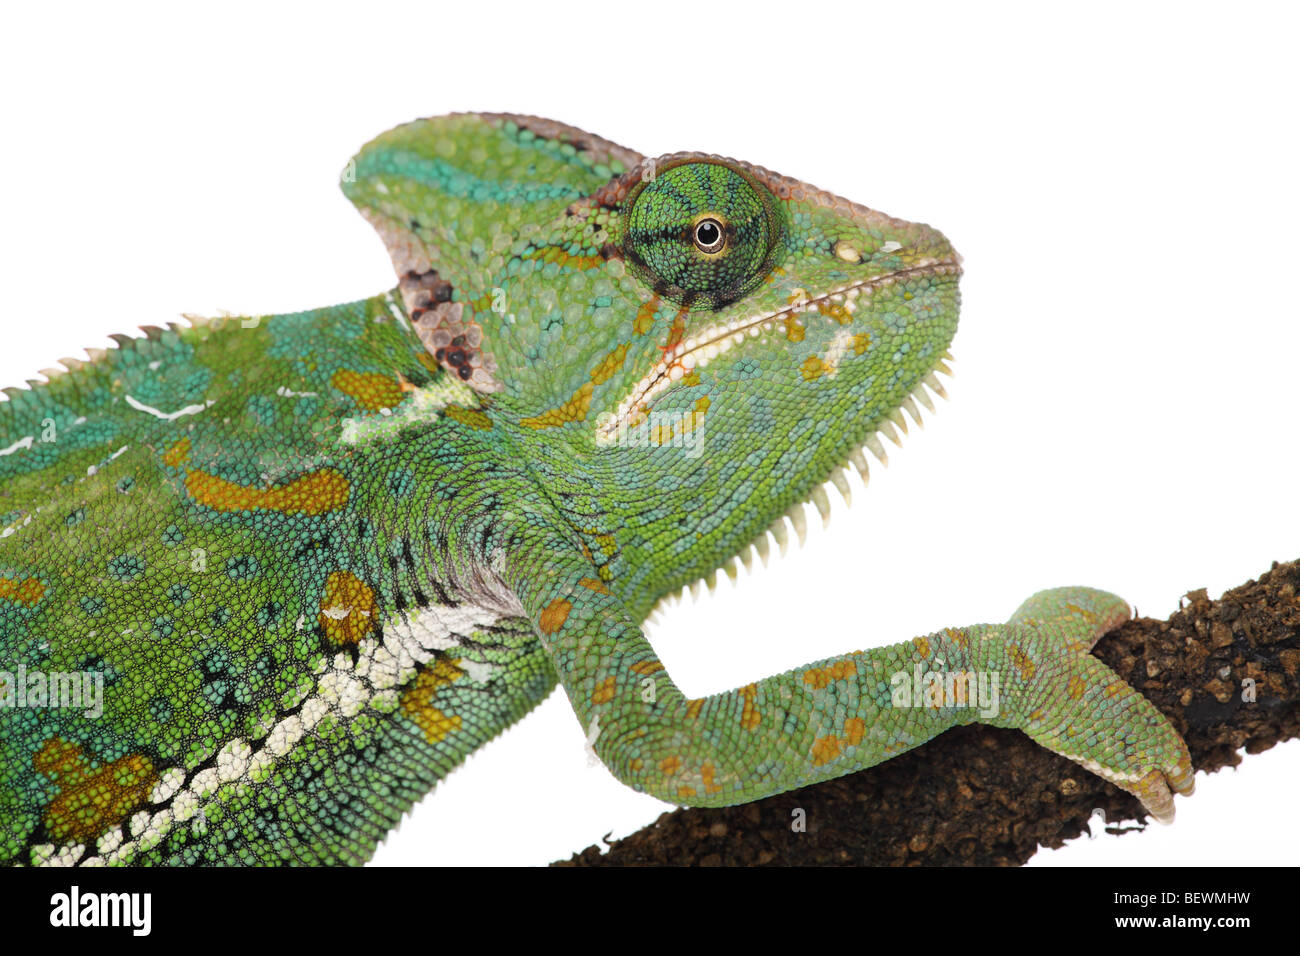 Studio photograph of a Yemen or Veiled Chameleon Stock Photo